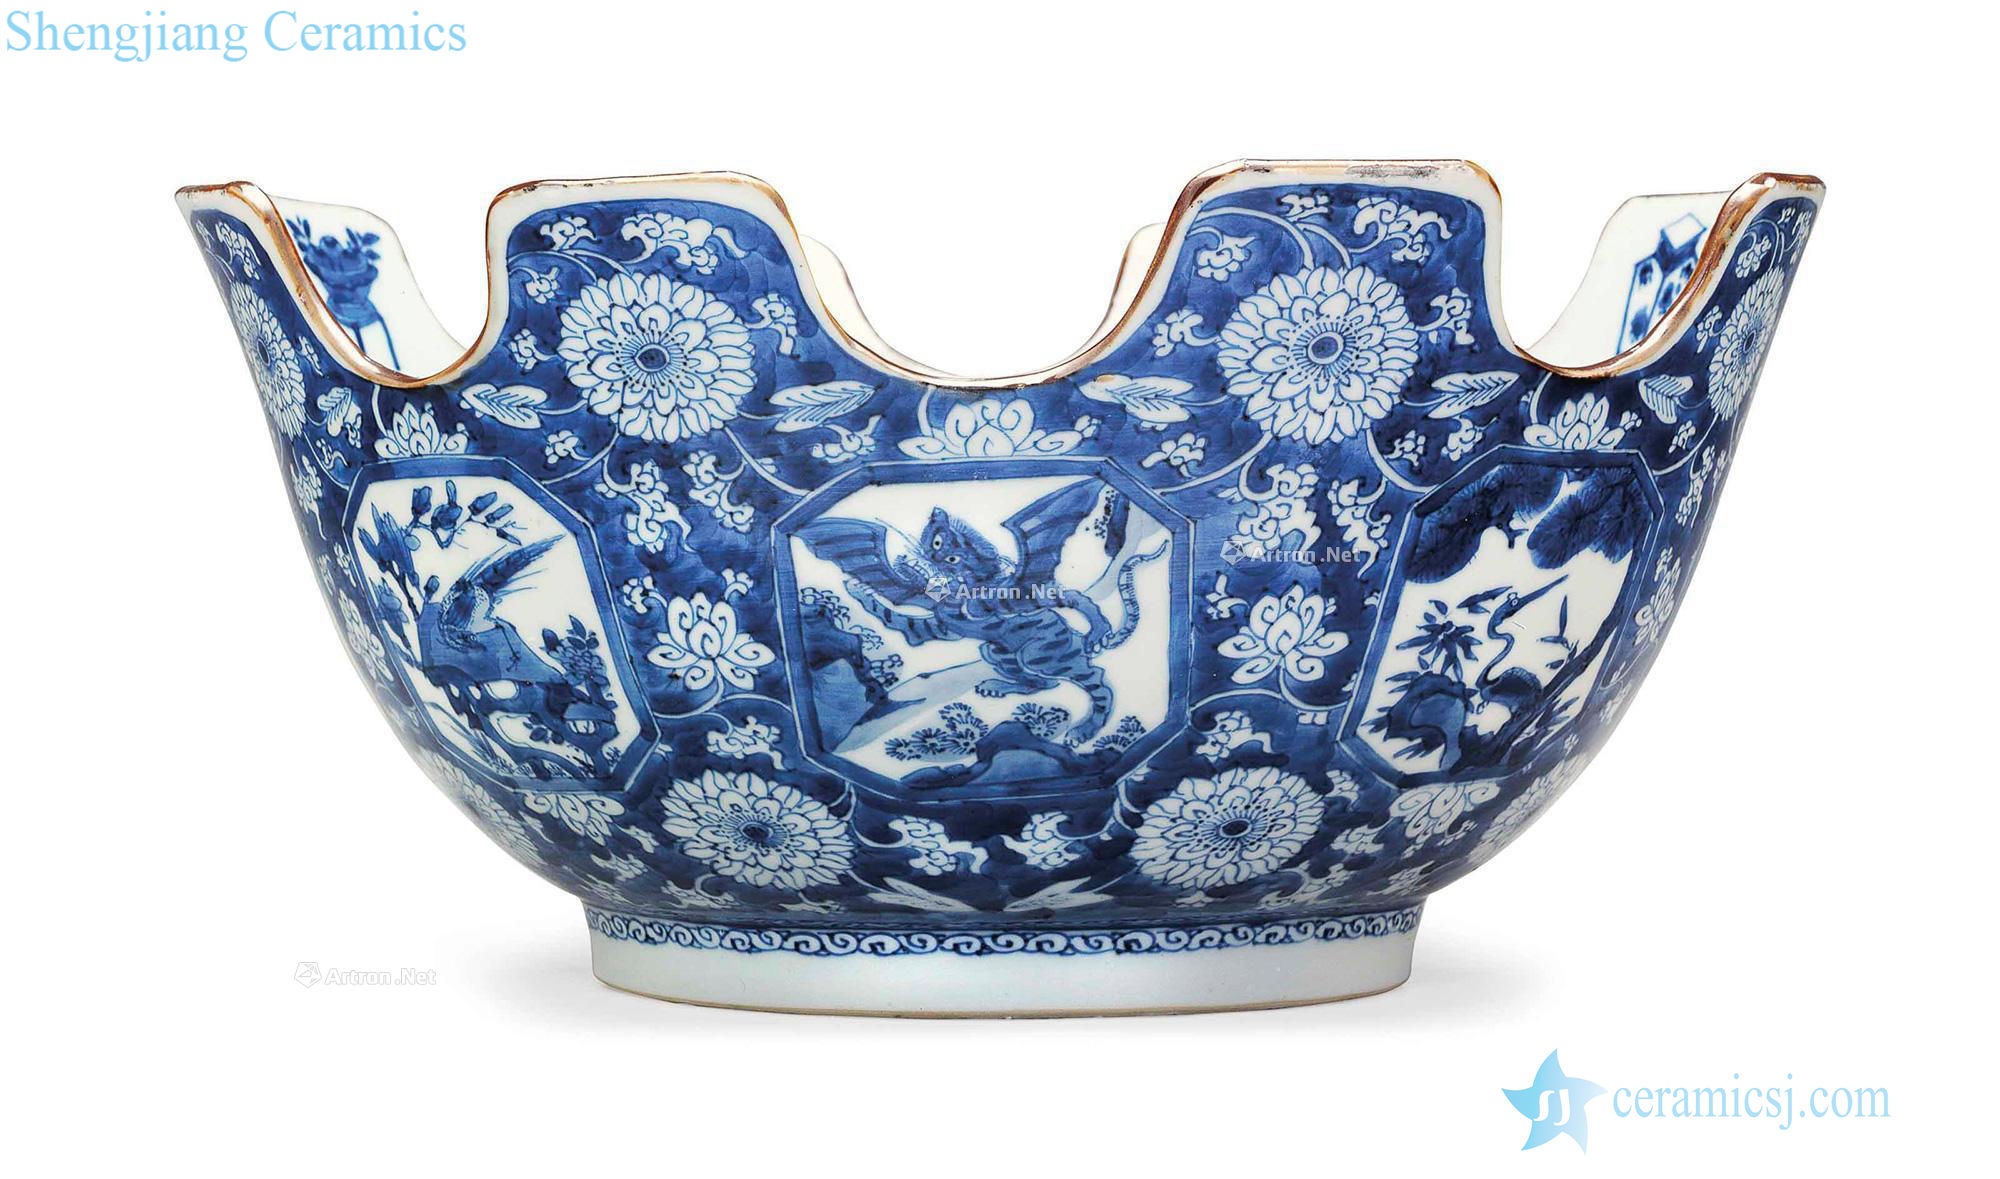 Kangxi period, 1662-1722 - A RARE BLUE AND WHITE MONTEITH